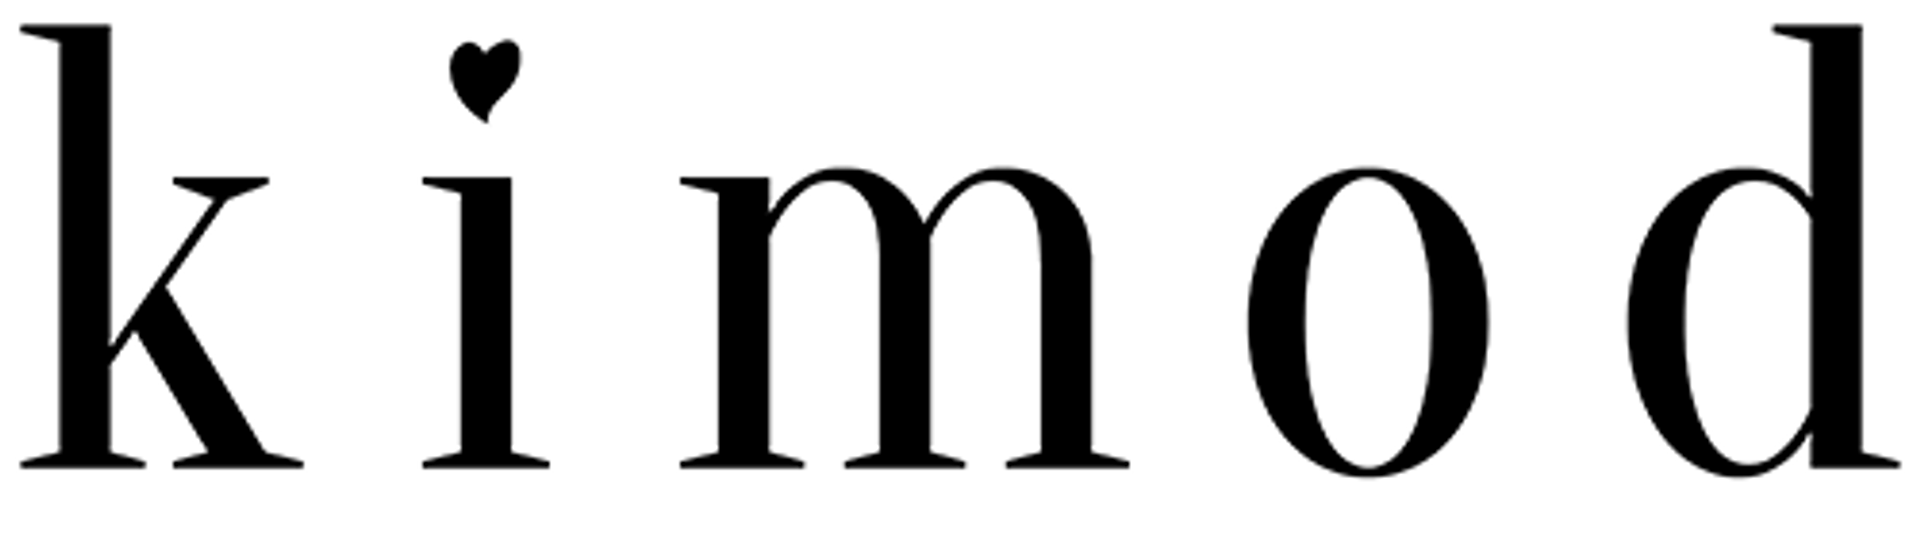 KIMOD logo de catálogo